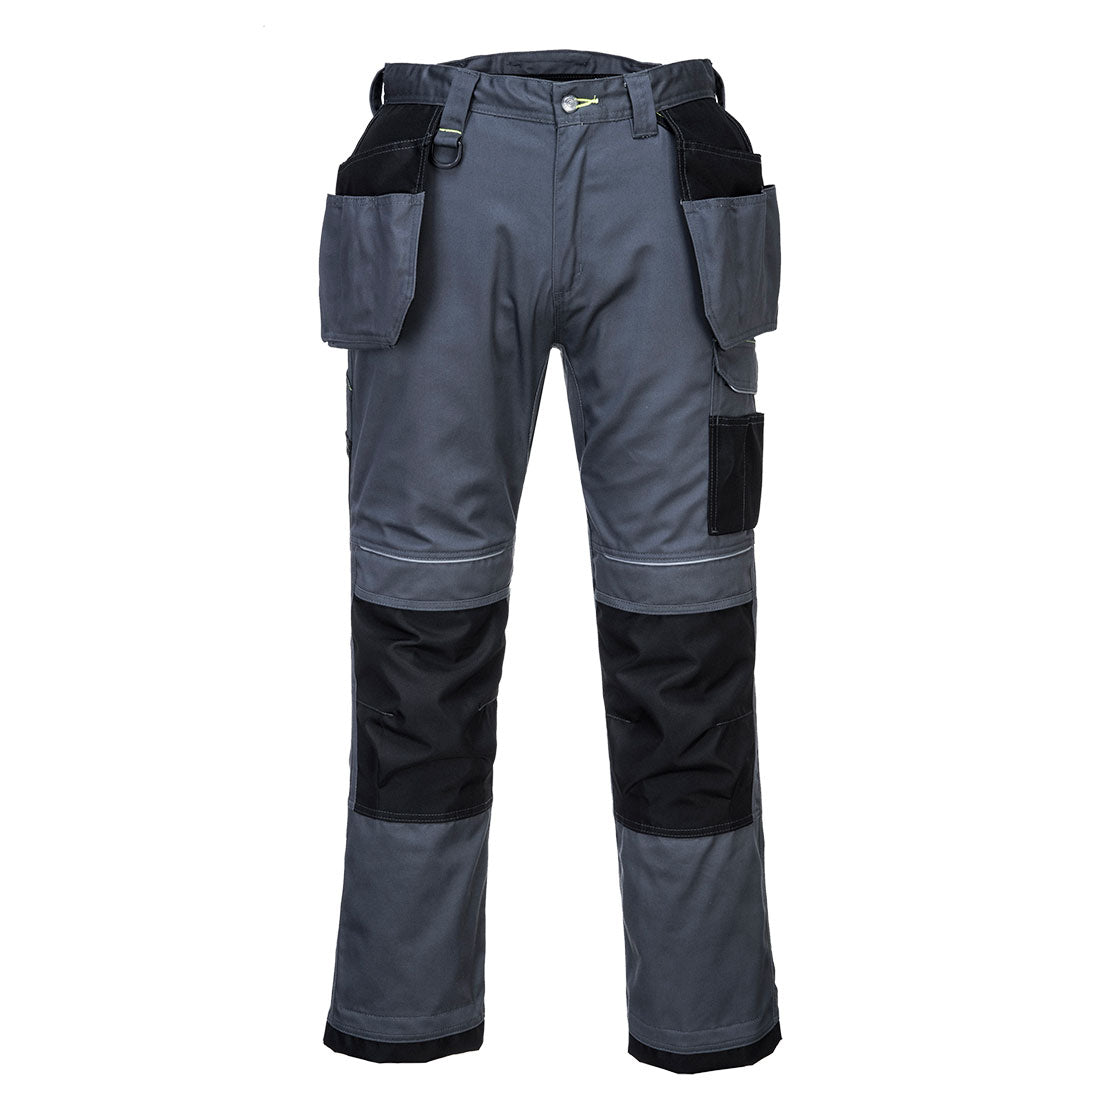 Portwest T602 - Grey/Black  40 Short PW3 Holster Work Trousers Combat Cargo Pants